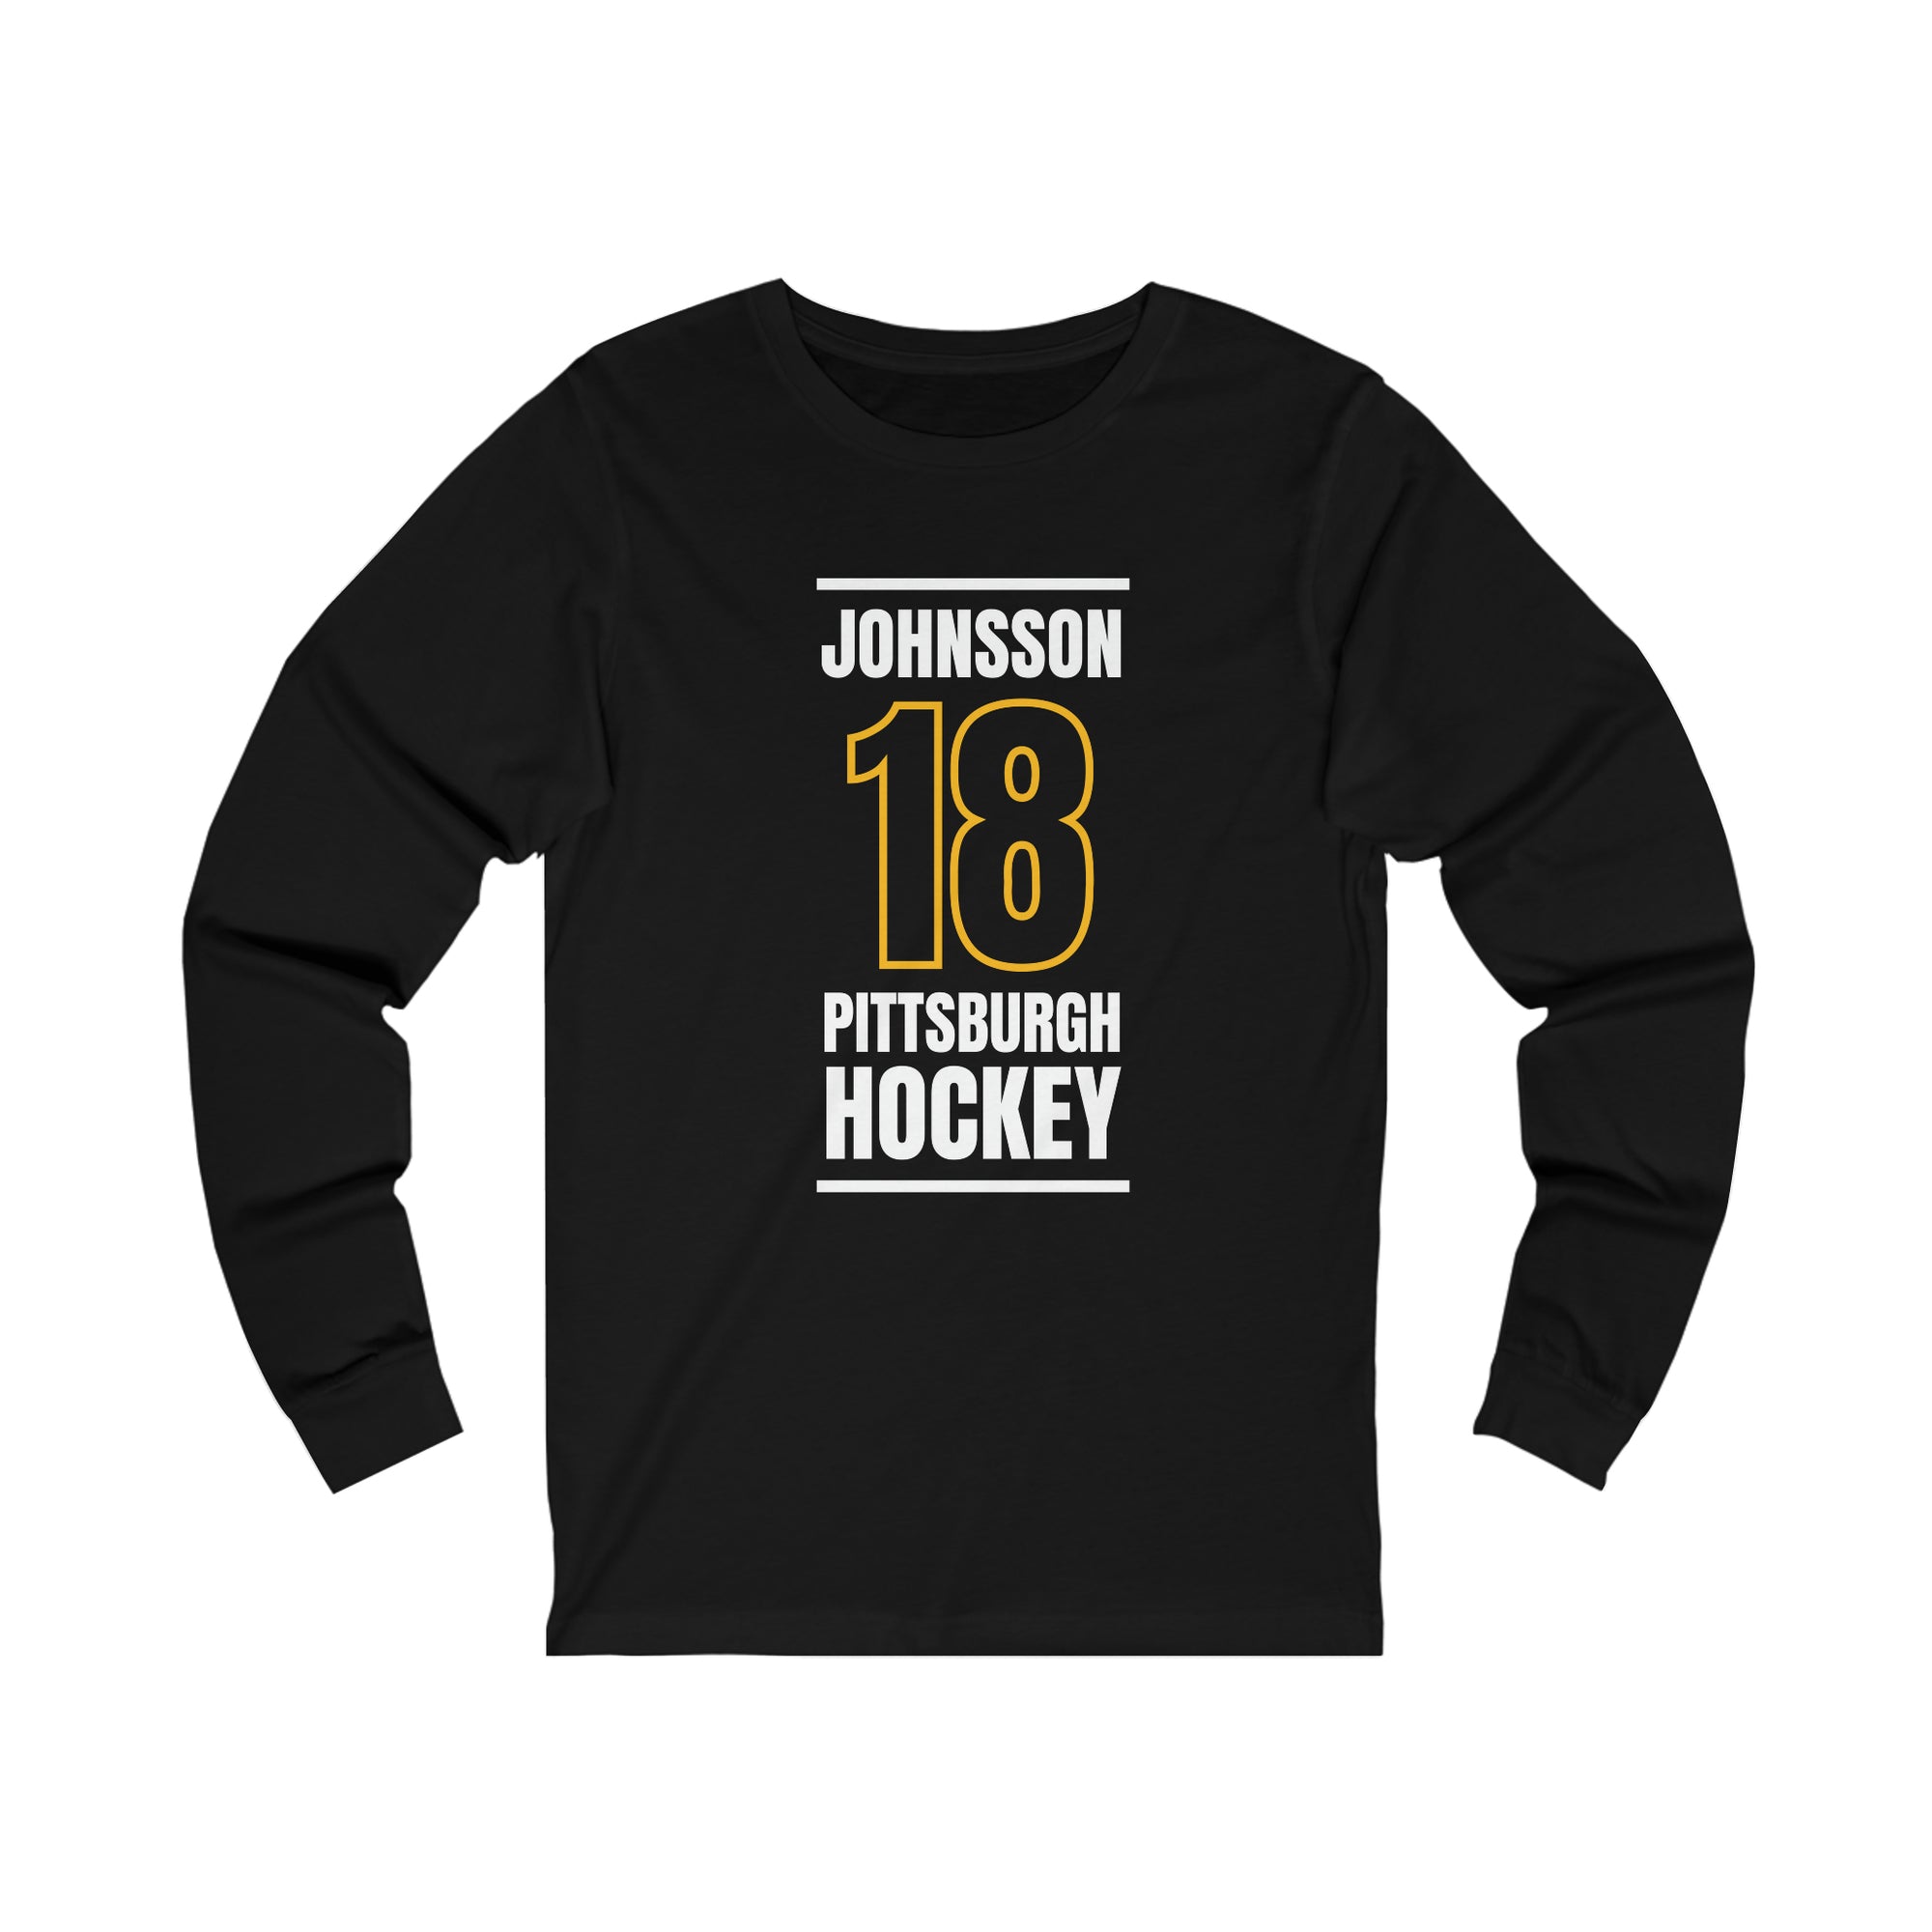 Johnsson 18 Pittsburgh Hockey Black Vertical Design Unisex Jersey Long Sleeve Shirt